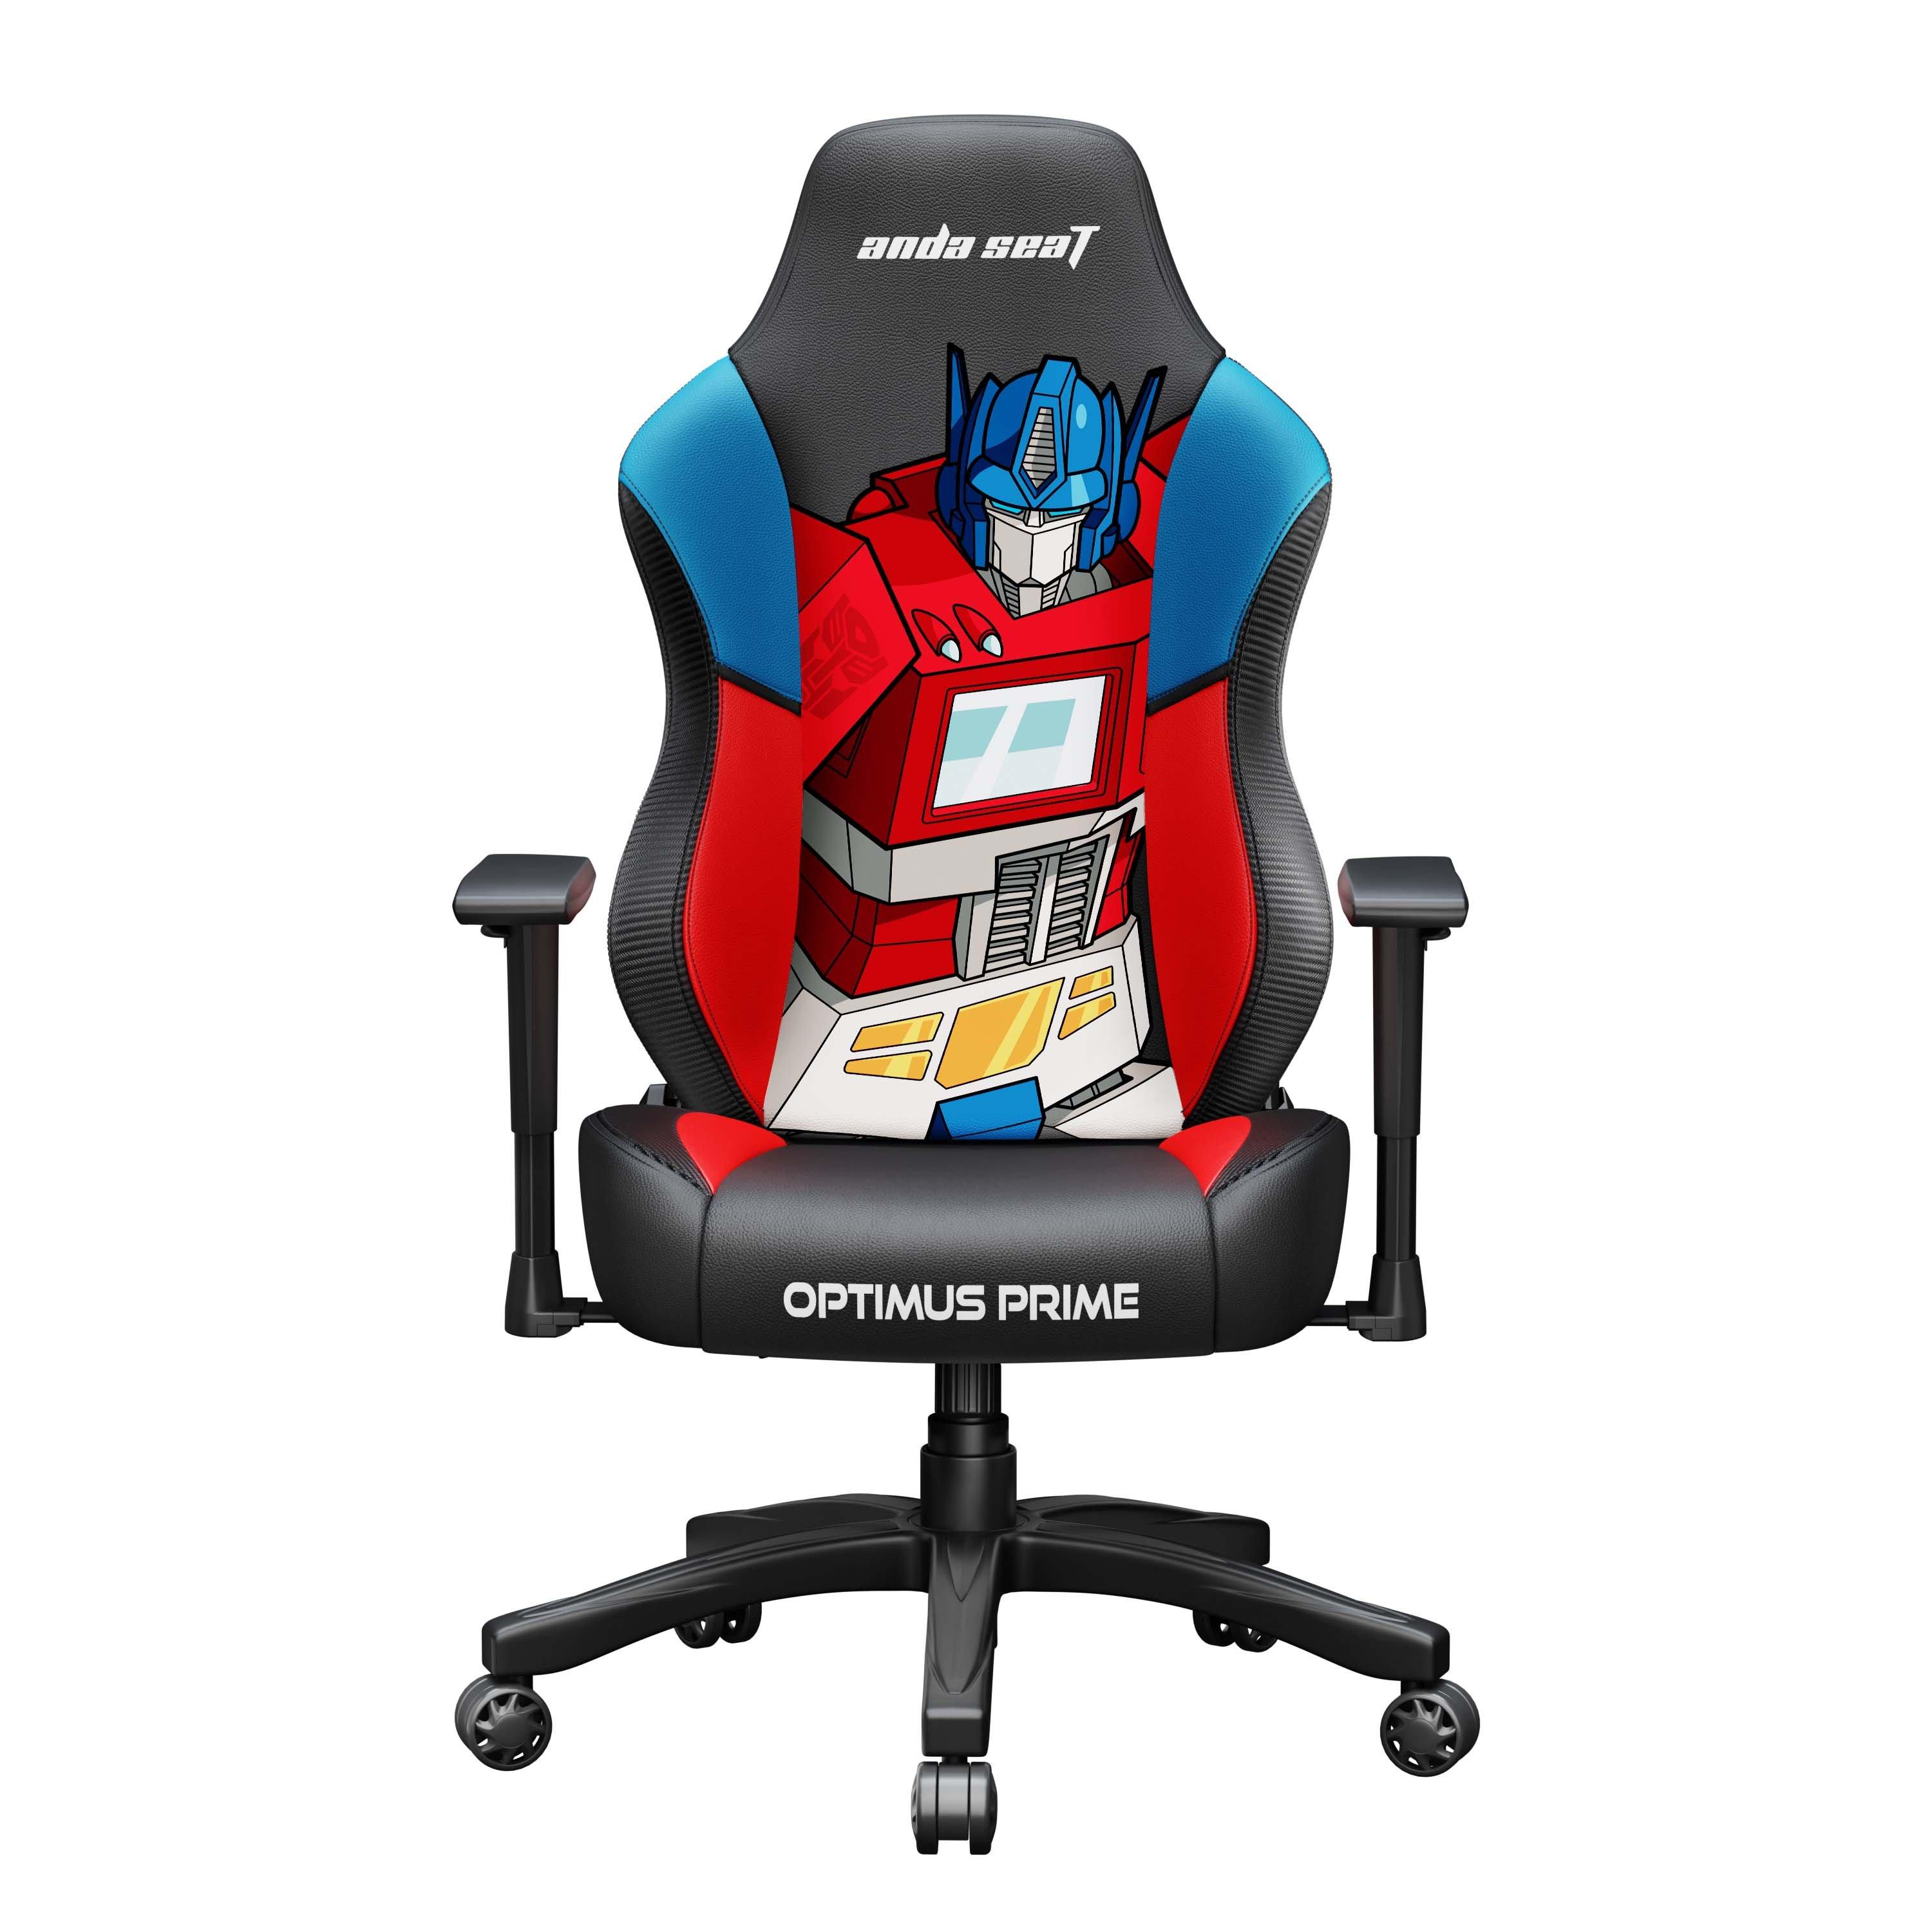 AndaSeat Transformers Edition Premium Gaming Chair Optimus Prime